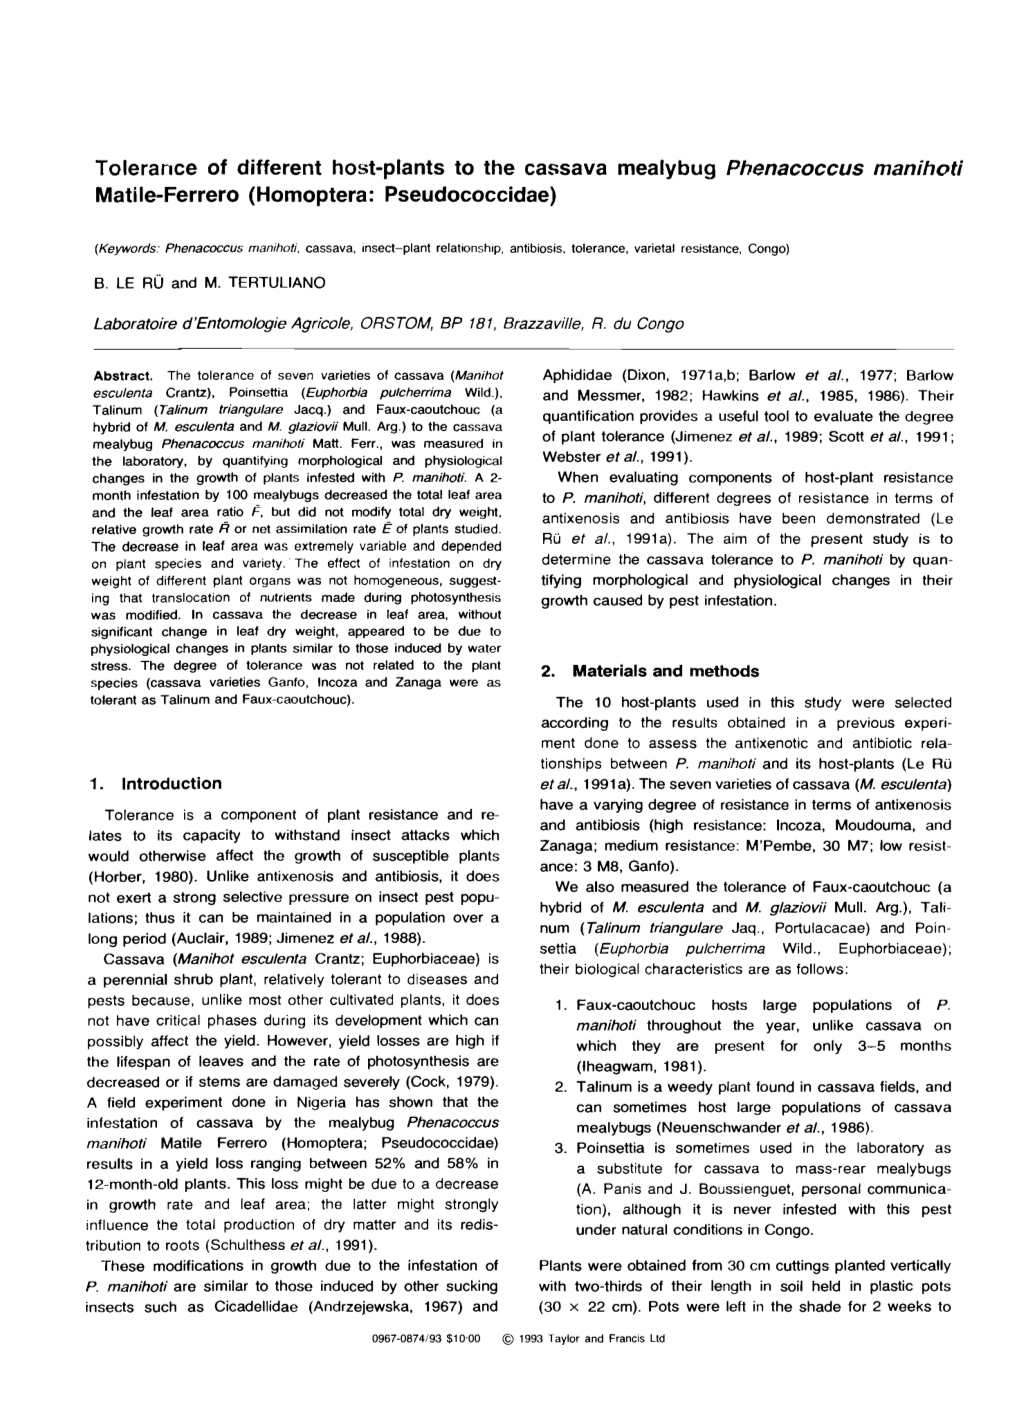 Tolerance of Different Host-Plants to the Cassava Mealybug Phenacoccus Manihoti Mati Le-Ferrero (Homoptera: Pseudococcidae)